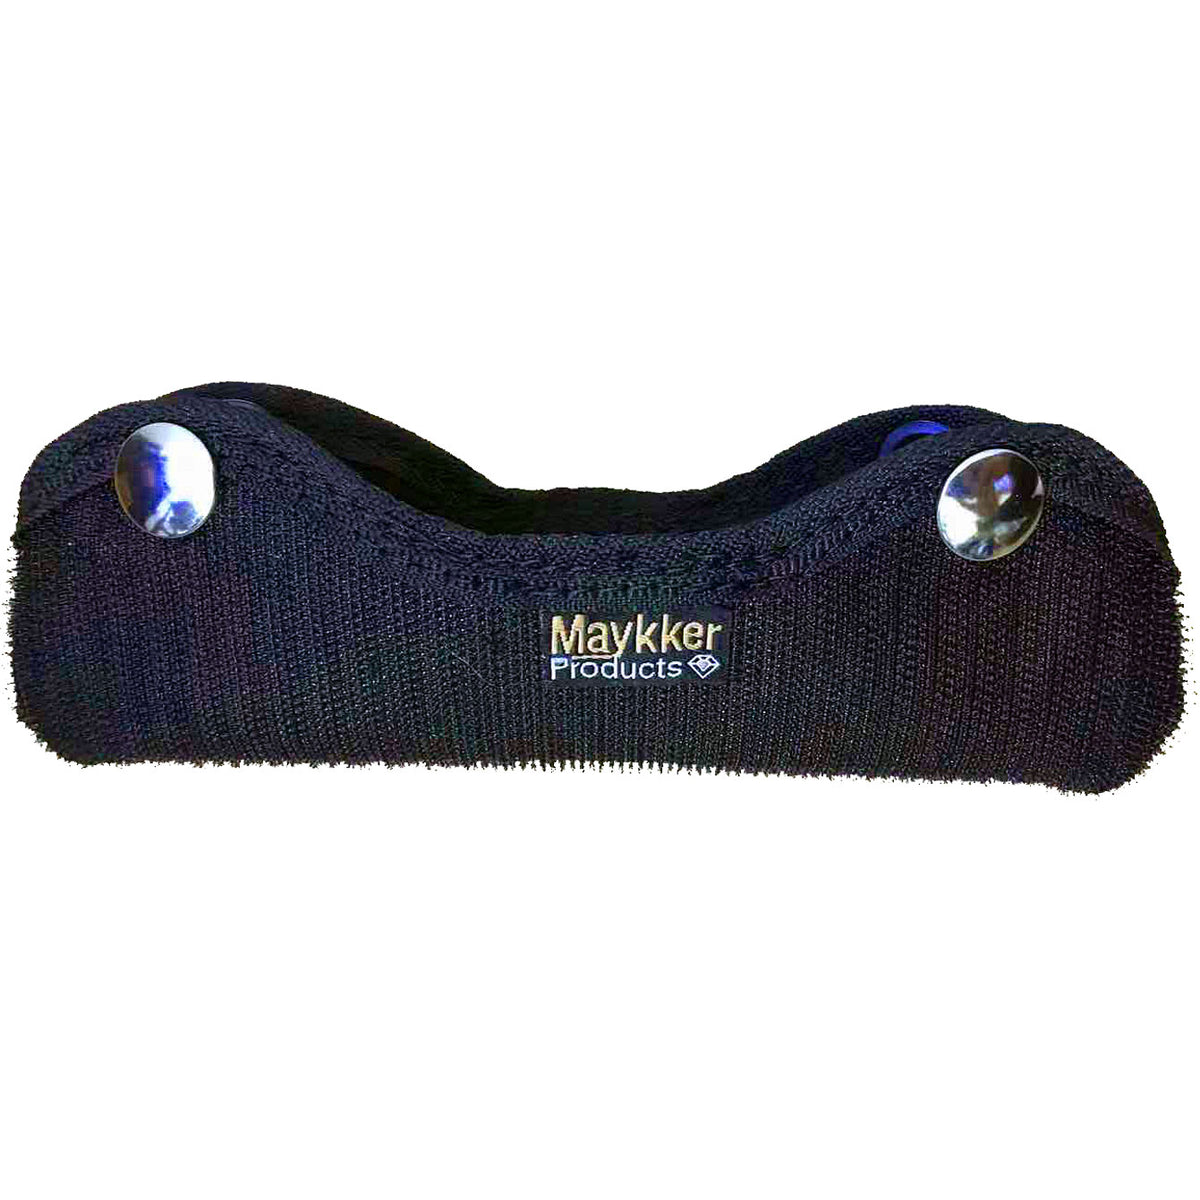 Maykker Scotsman Sleeve Complete, Scrubbers